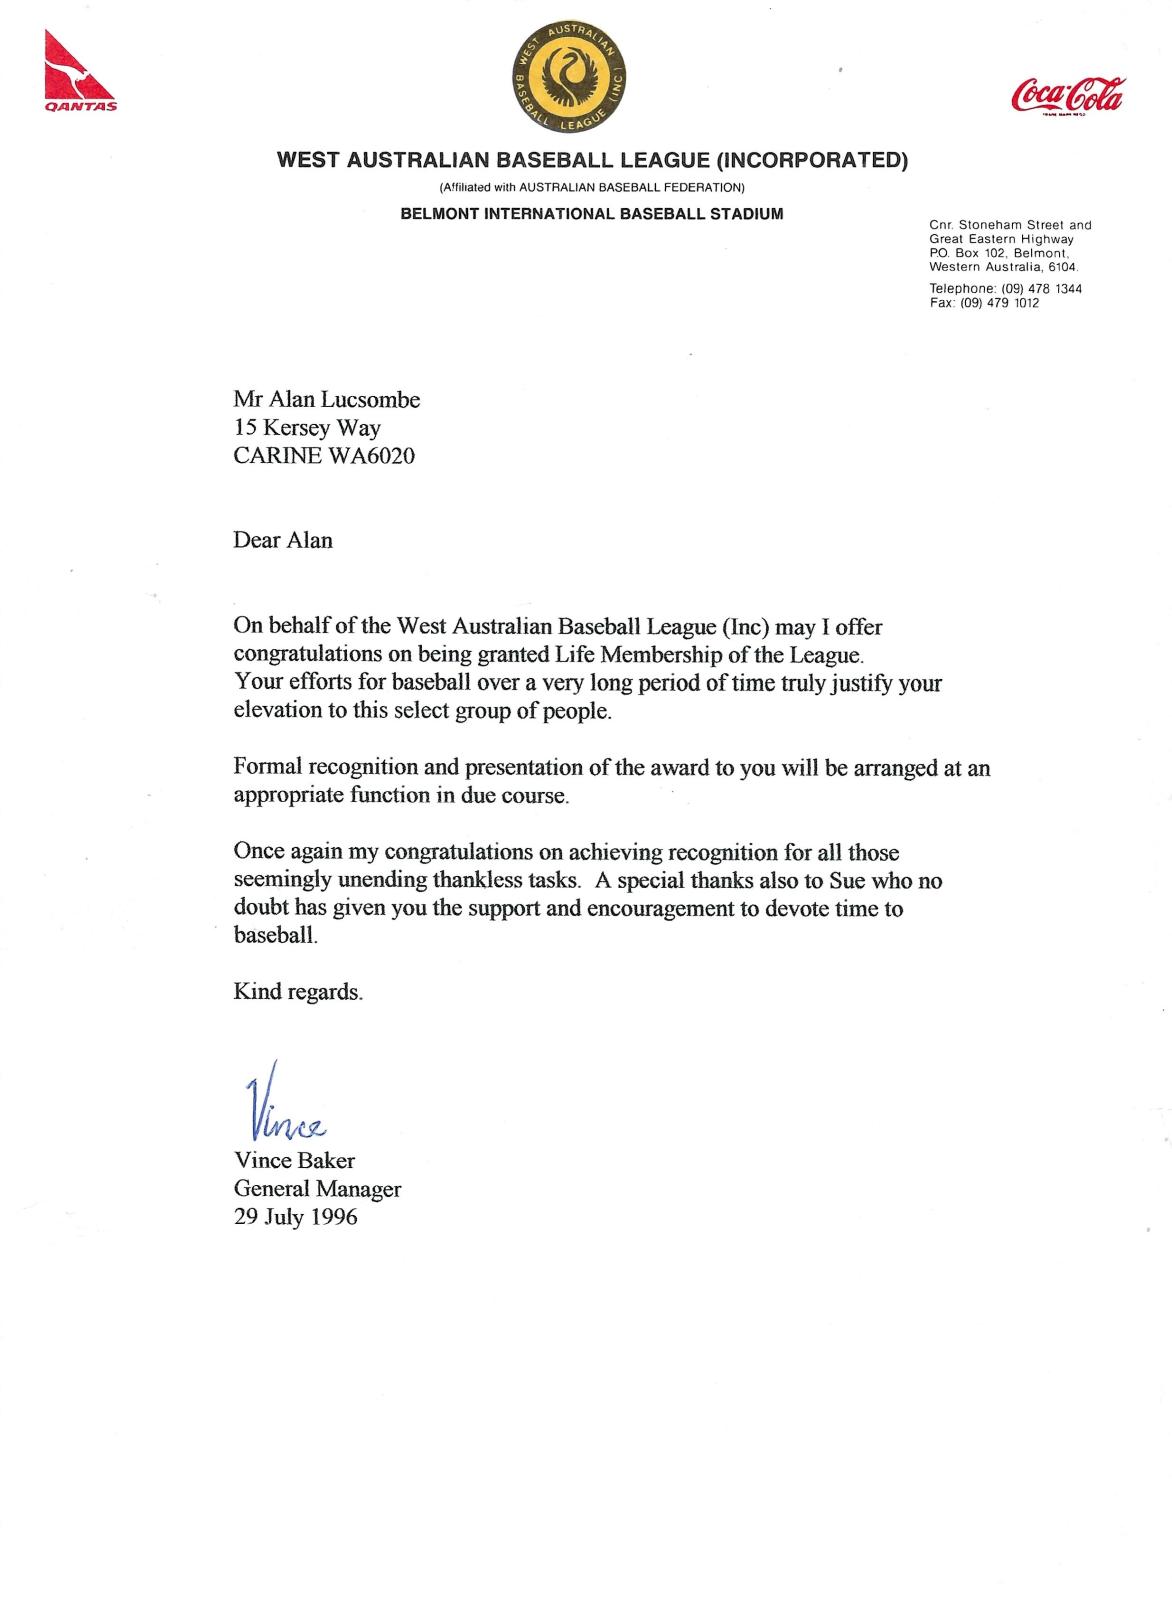 Letter awarding Alan Luscombe Life Membership of the WABL